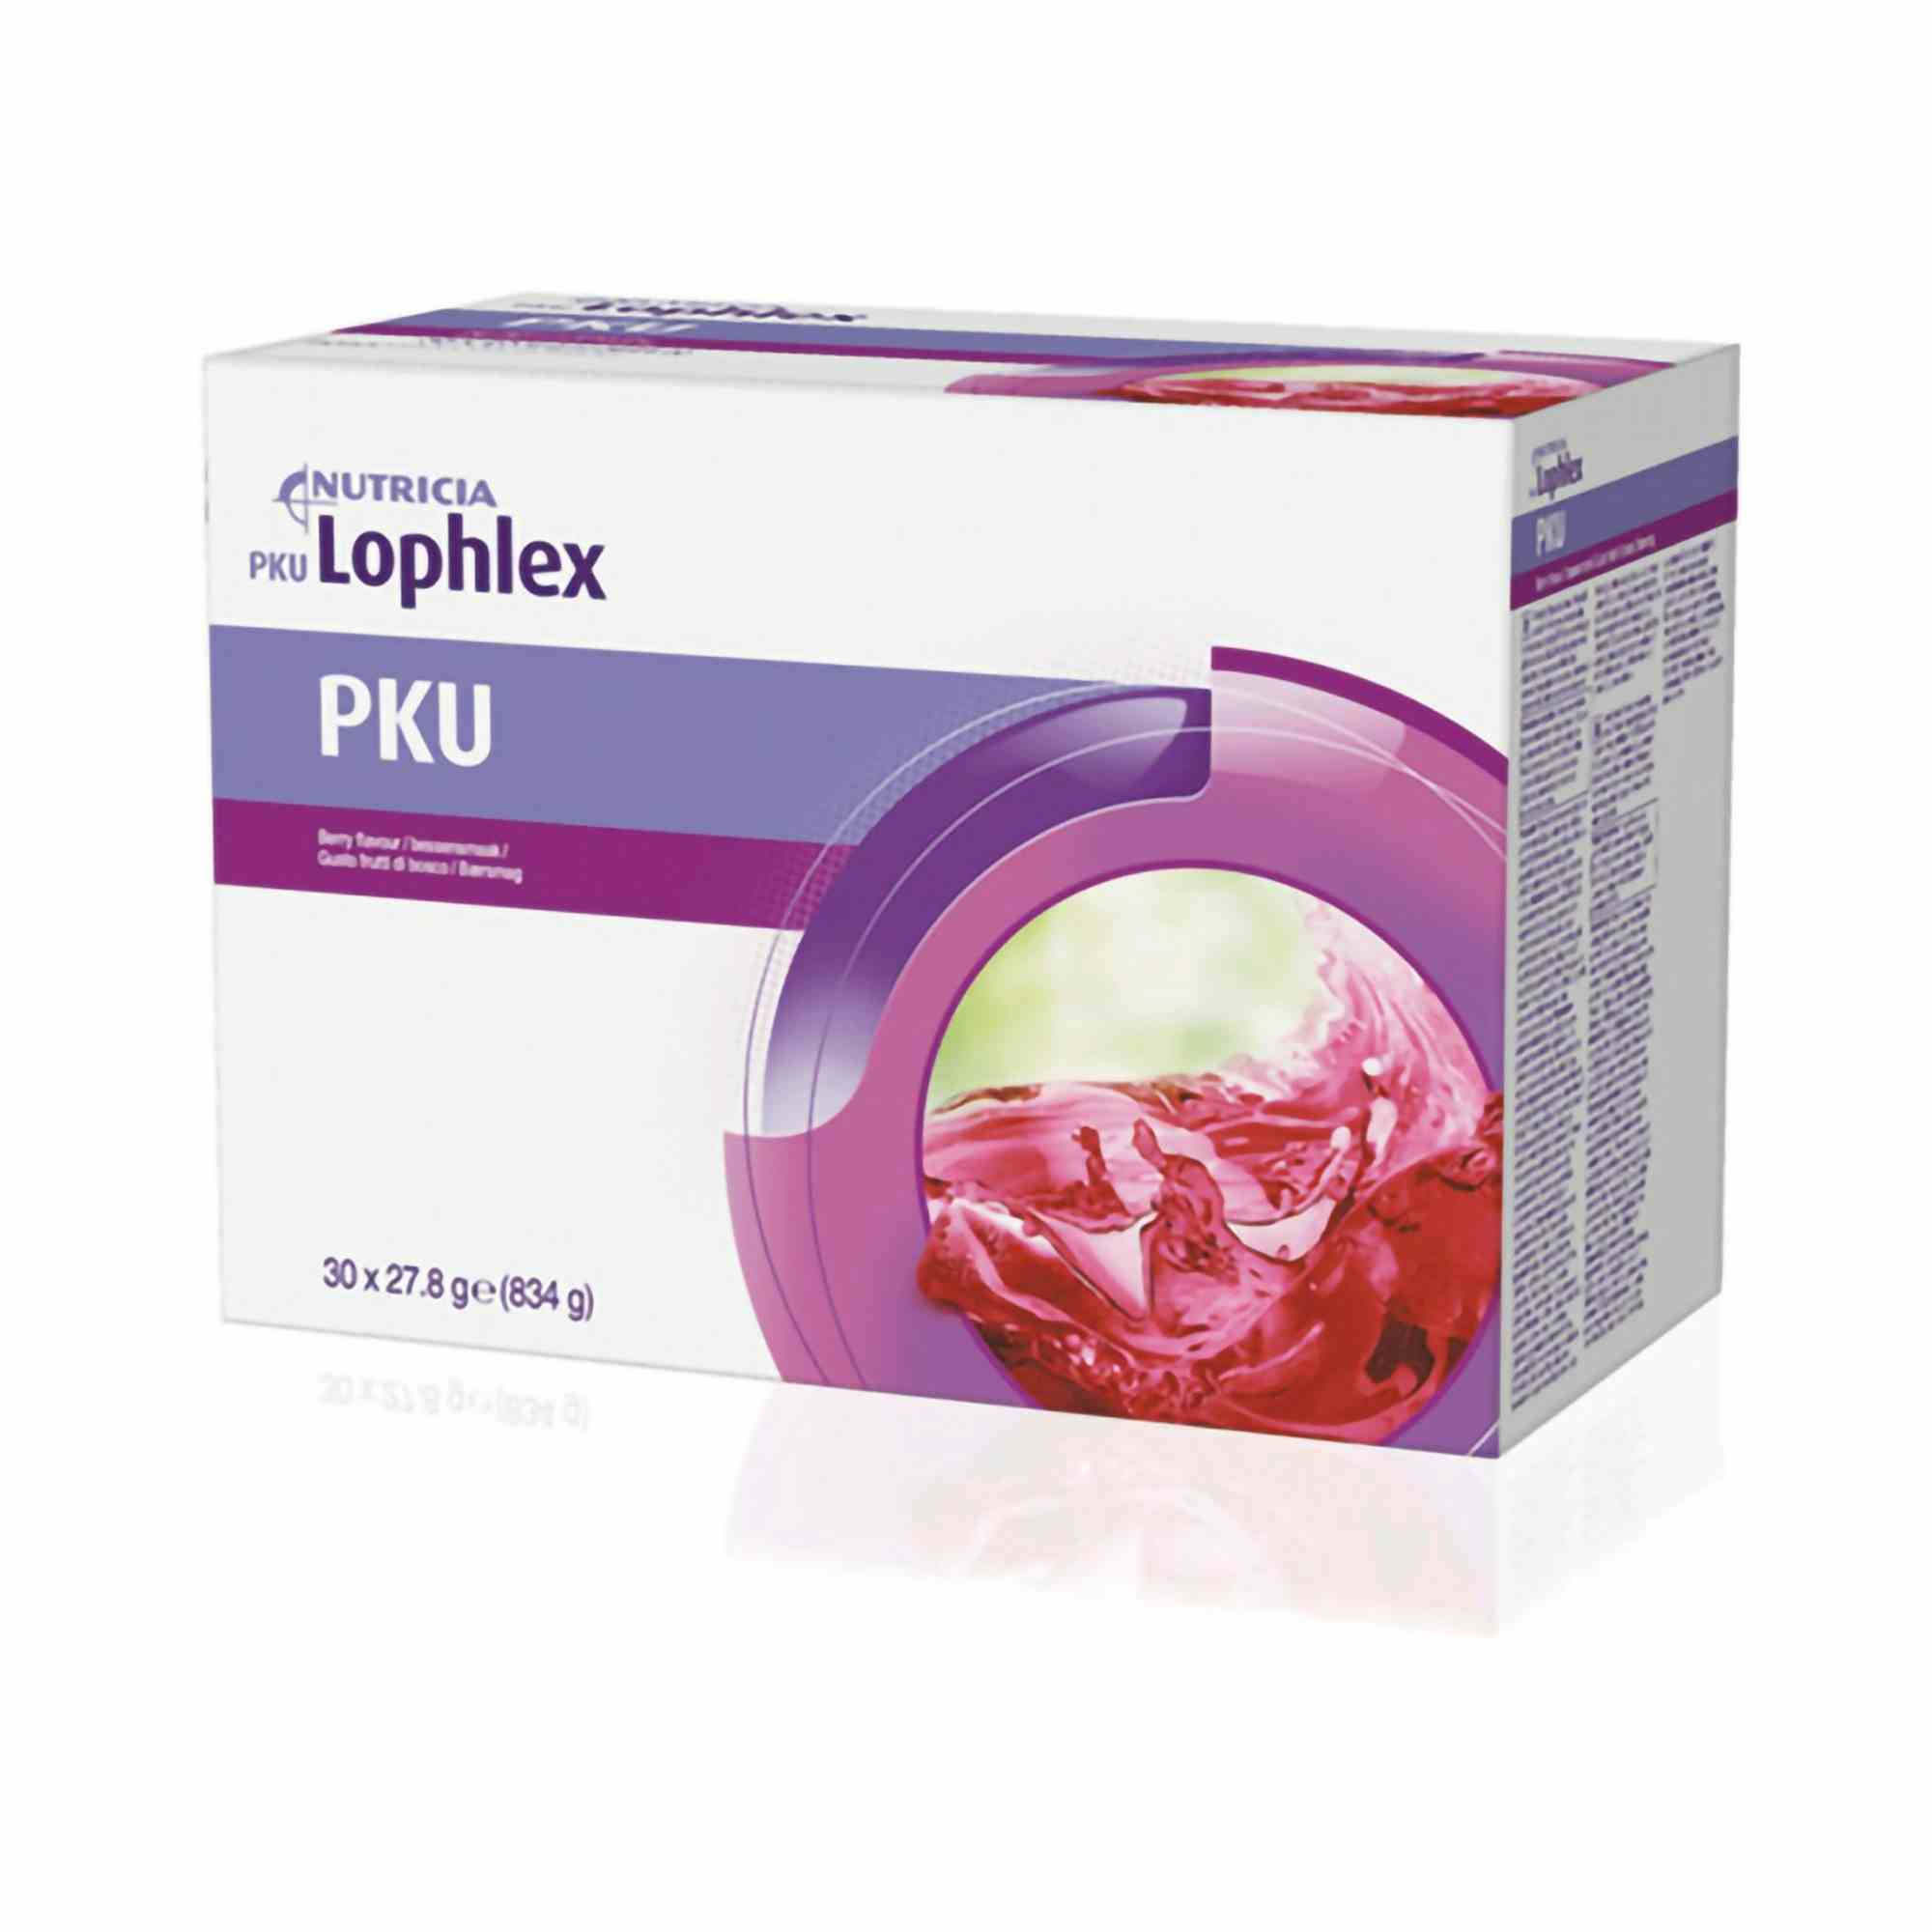 Nutrica Lophlex PKU Oral Supplement, Unflavored, 14.3 Gram, 49418, Case of 30